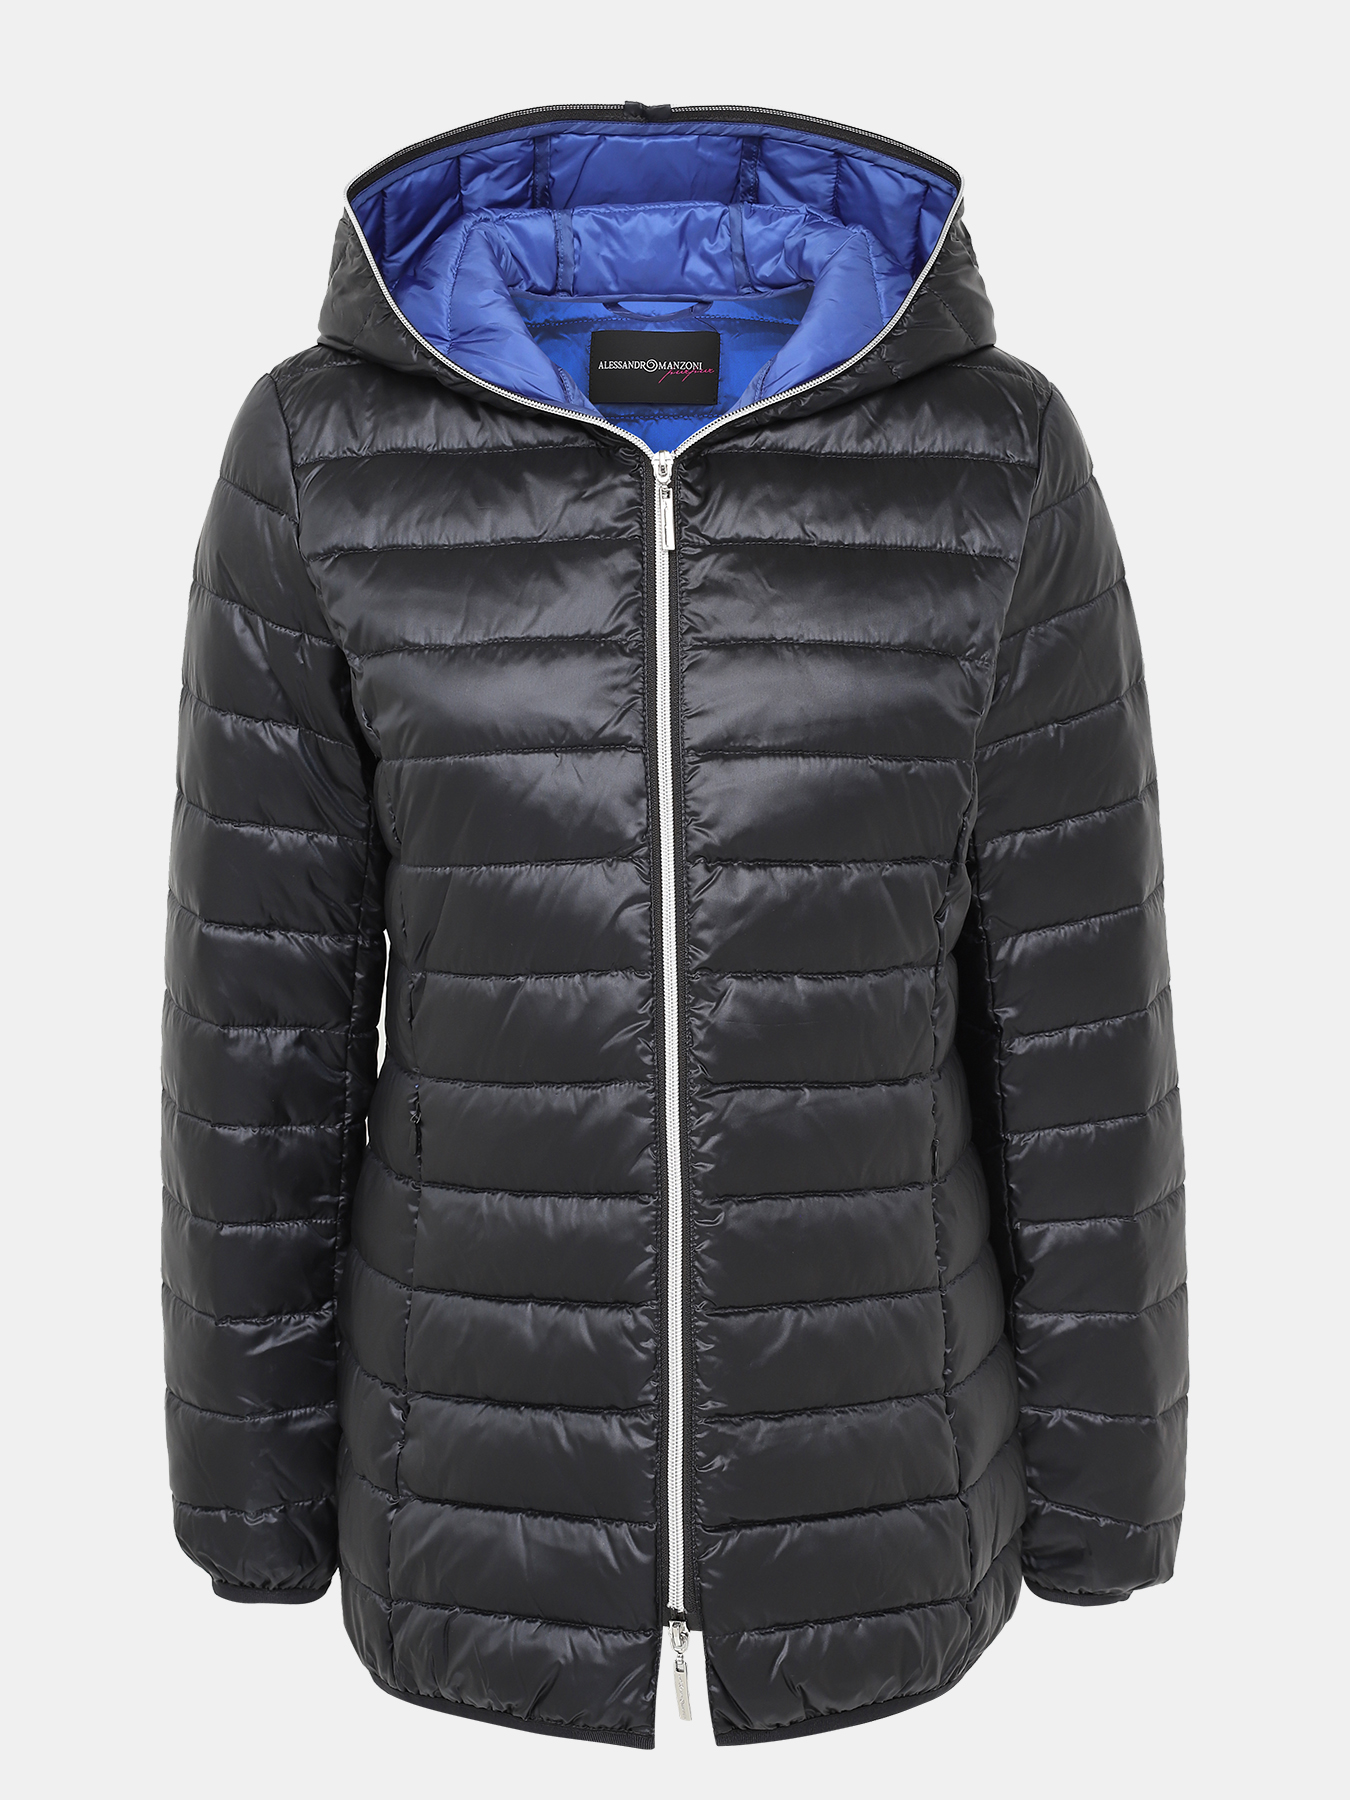 Куртка Alessandro Manzoni Purpur 405298-056, цвет темно-синий, размер 52-54 - фото 1